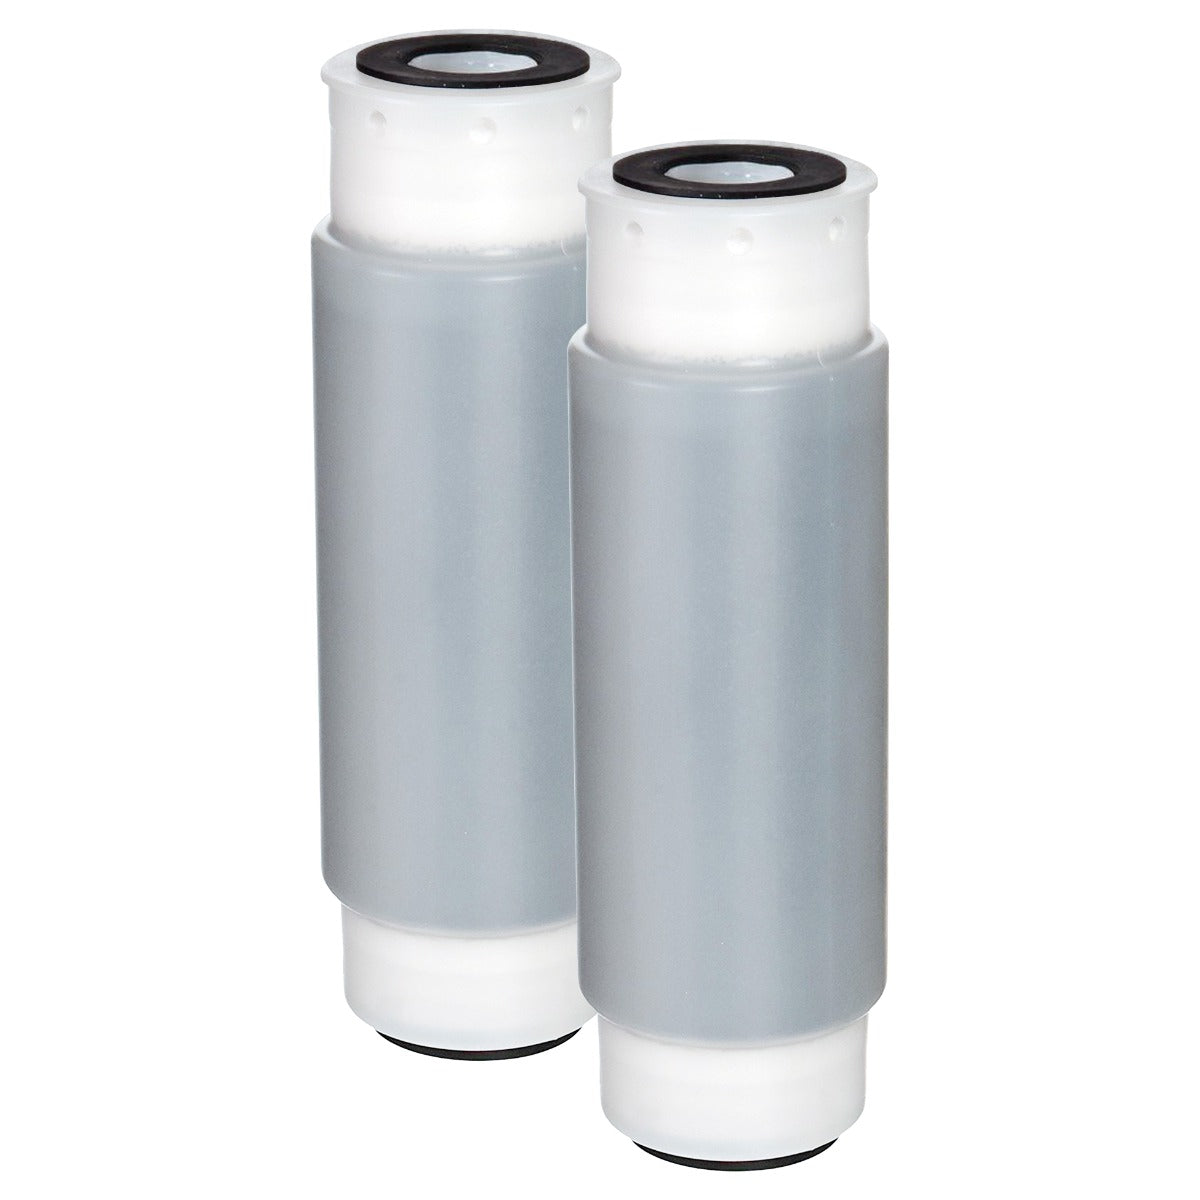 3M Aqua-Pure AP810 Whole House Water Filter Cartridge